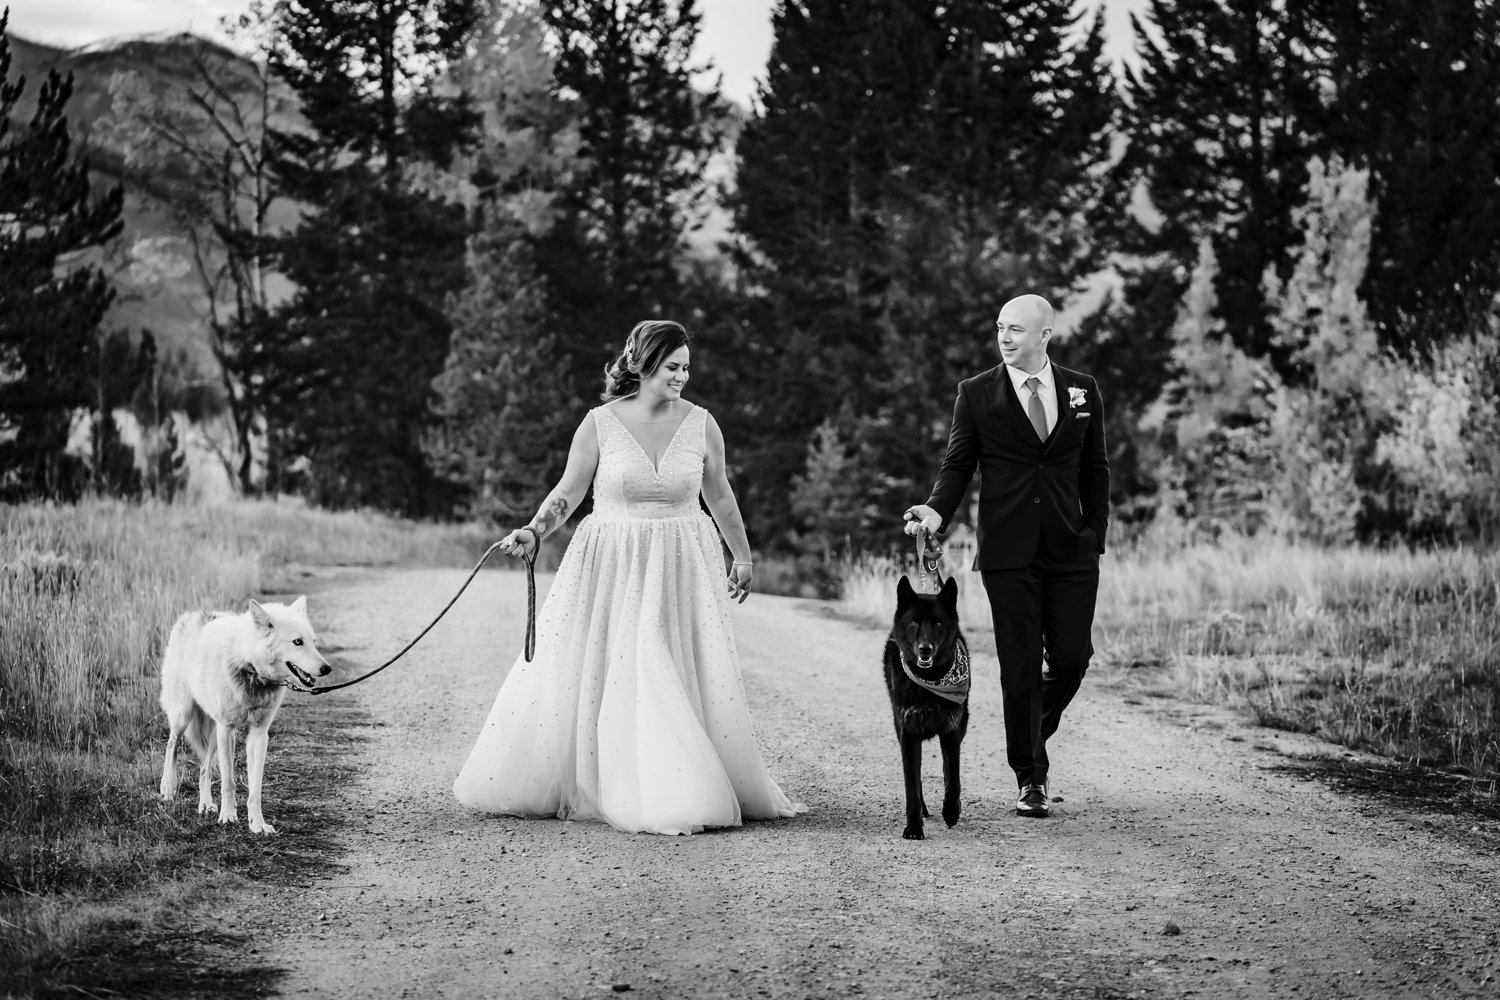  Antler Basin Ranch wedding by Granby photographer, JMGant Photography 